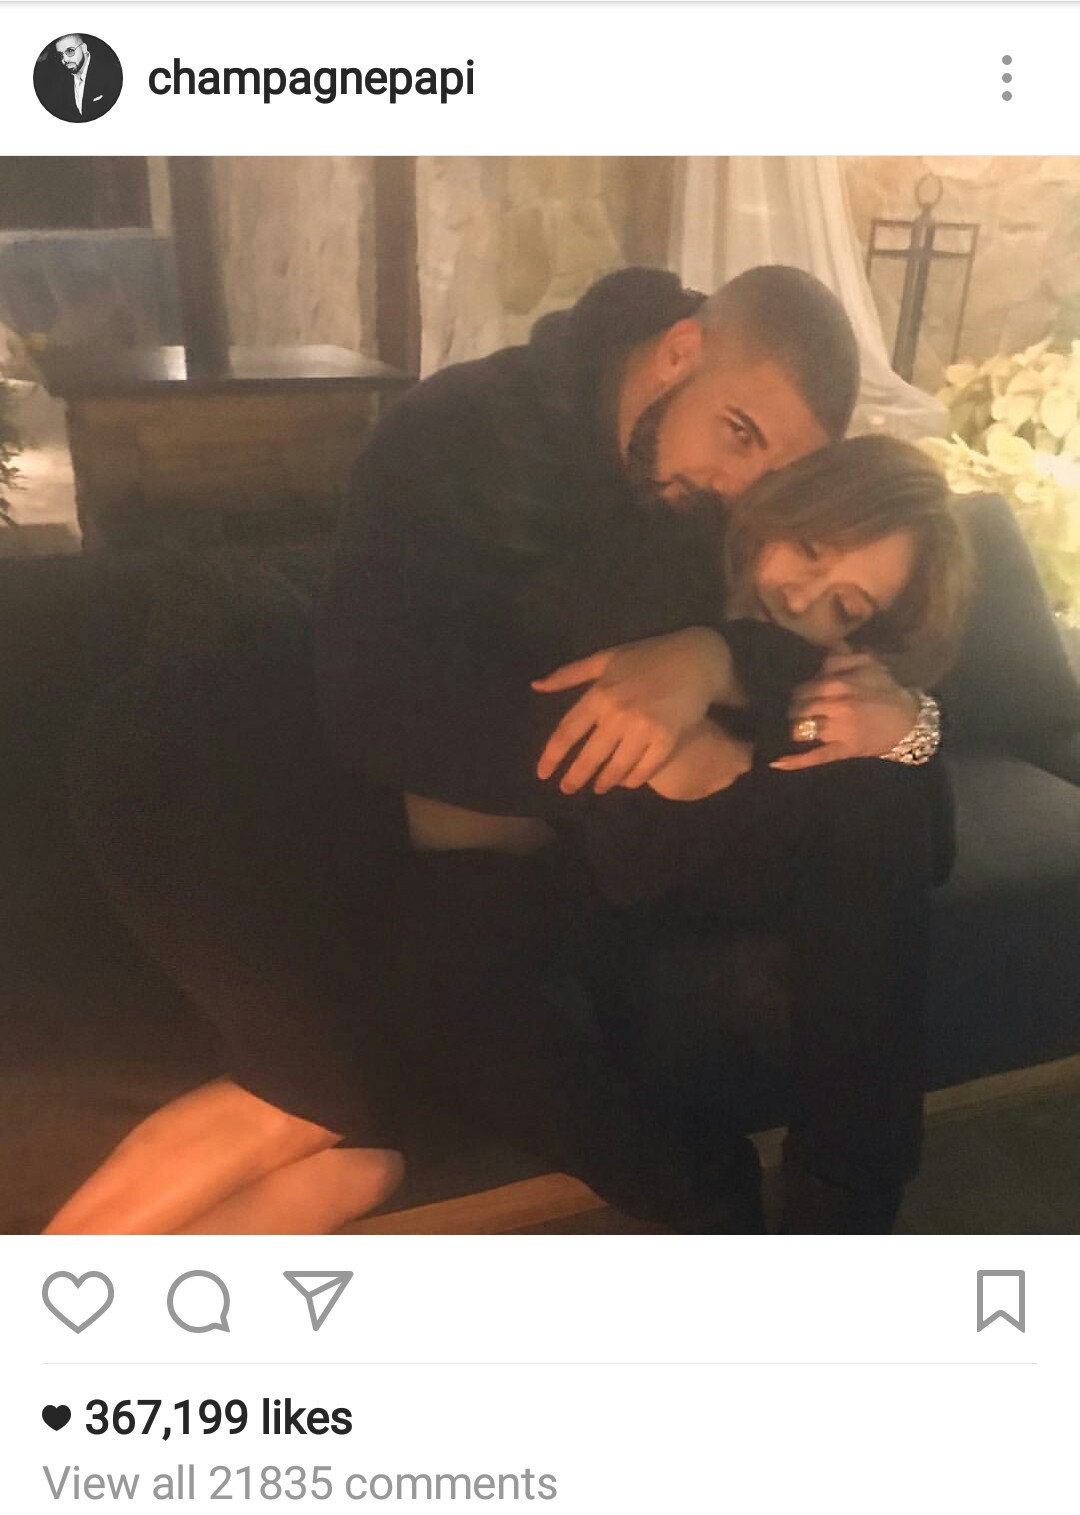 Drake And Jennifer Lopez Post Same Photo On Instagram At The Same Time